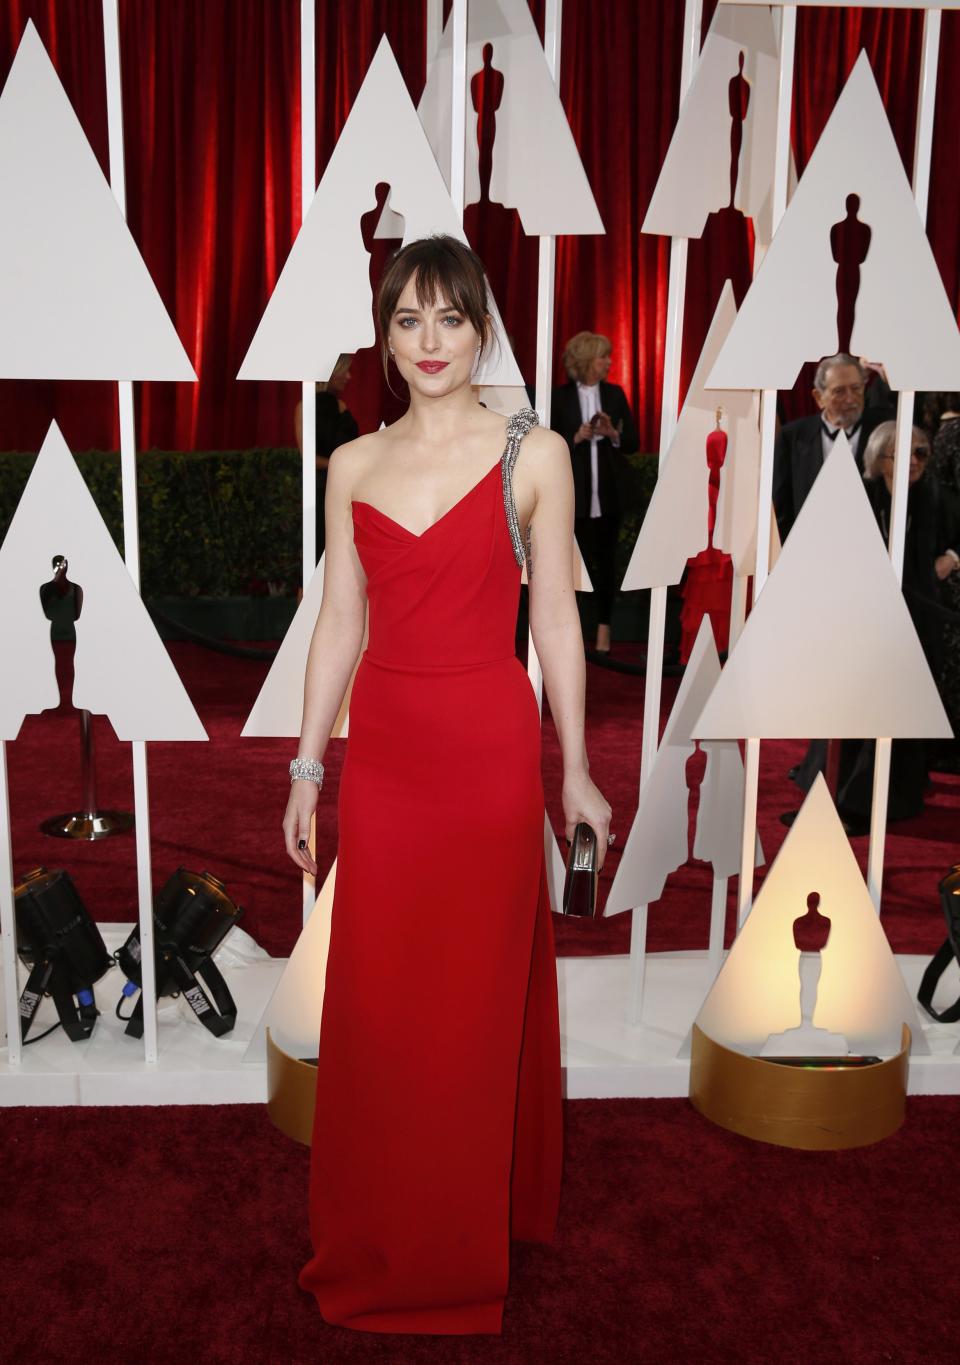 Actress Dakota Johnson arrives at the 87th Academy Awards in Hollywood, California